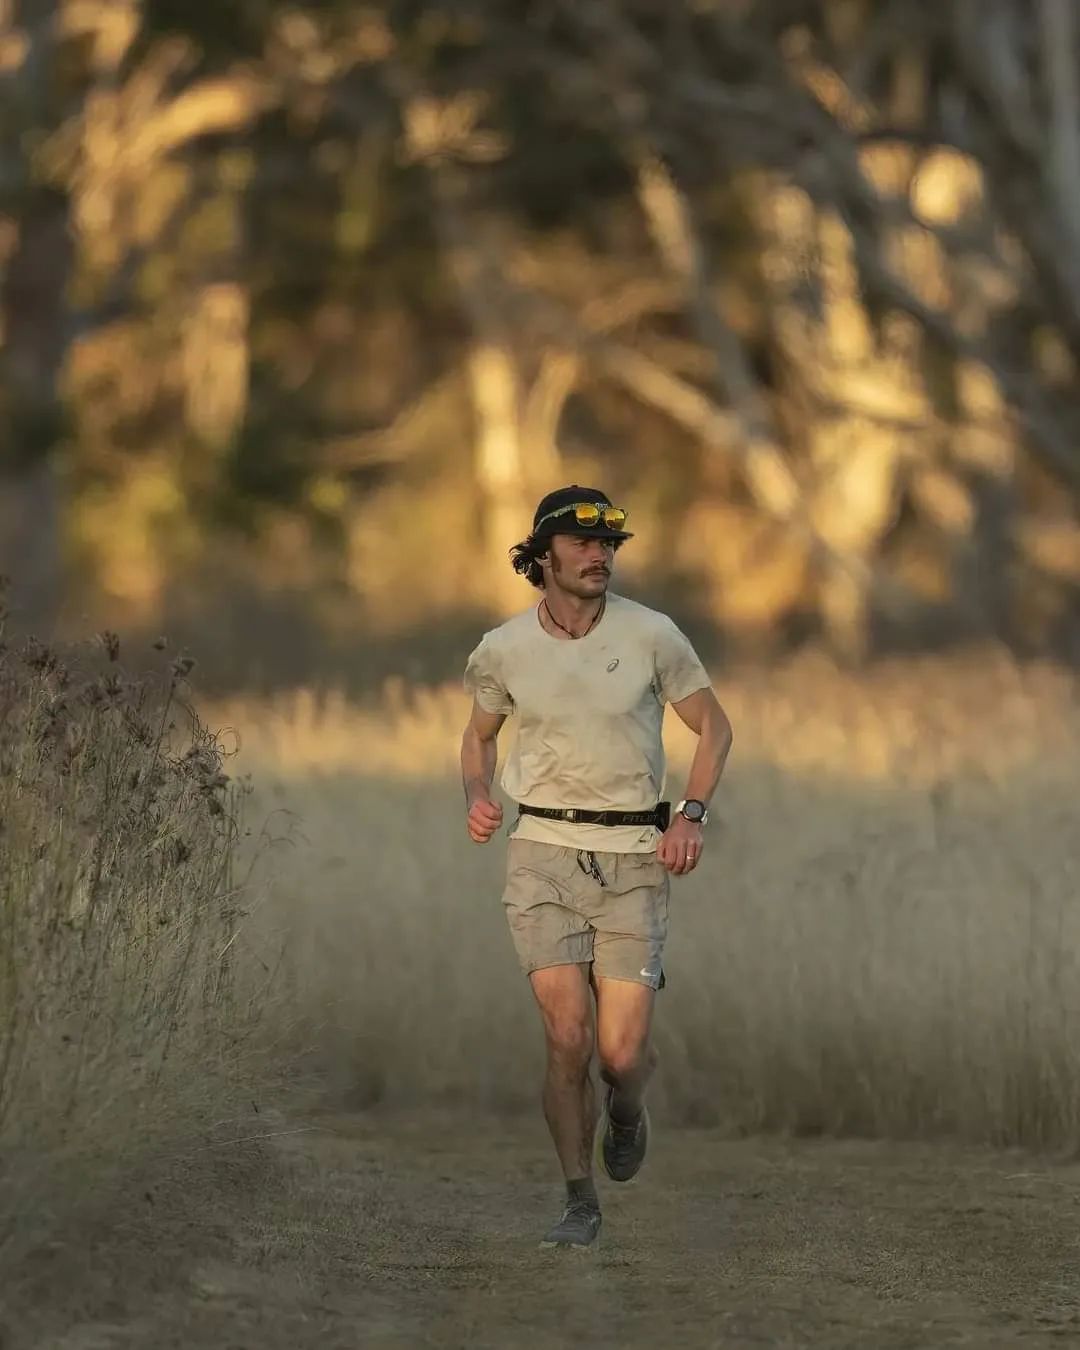 CurraNZ ultra-runner equals Backyard Ultra world record of 677km